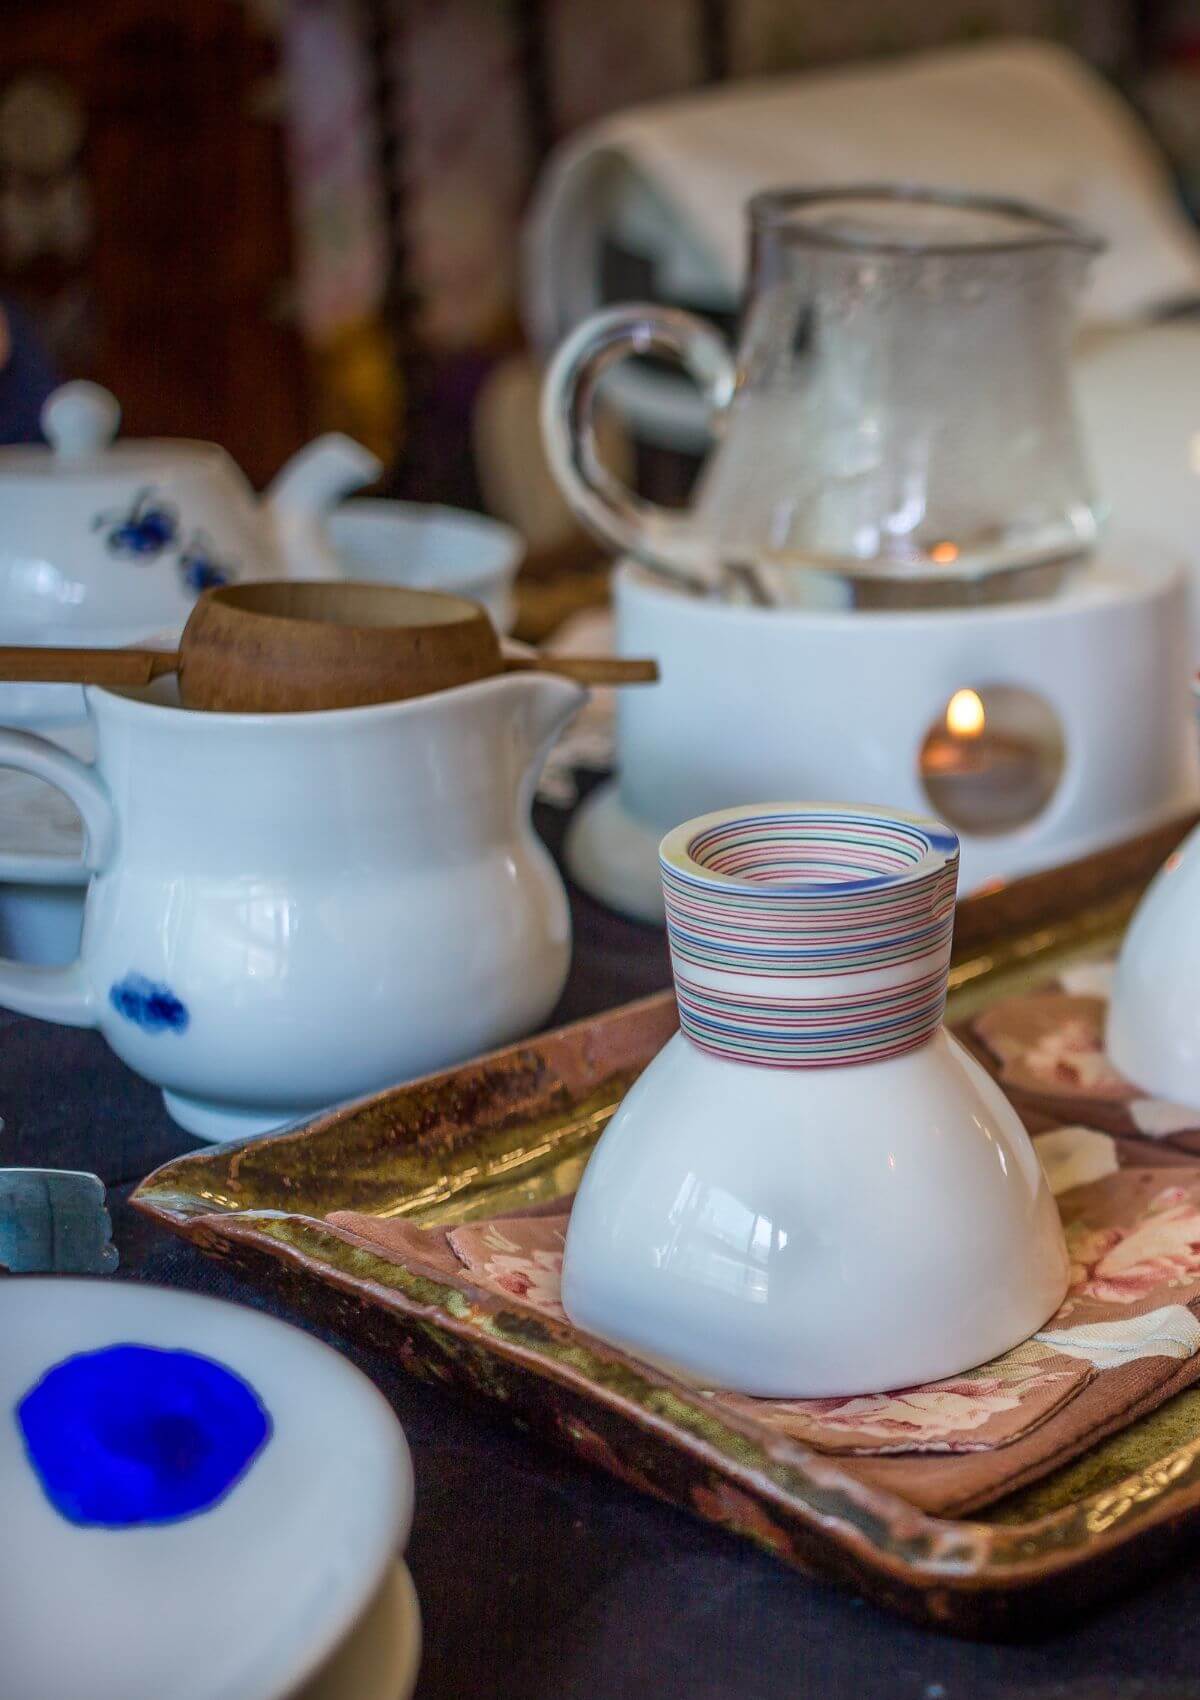 Tea and tea sets make great souvenirs from South Korea